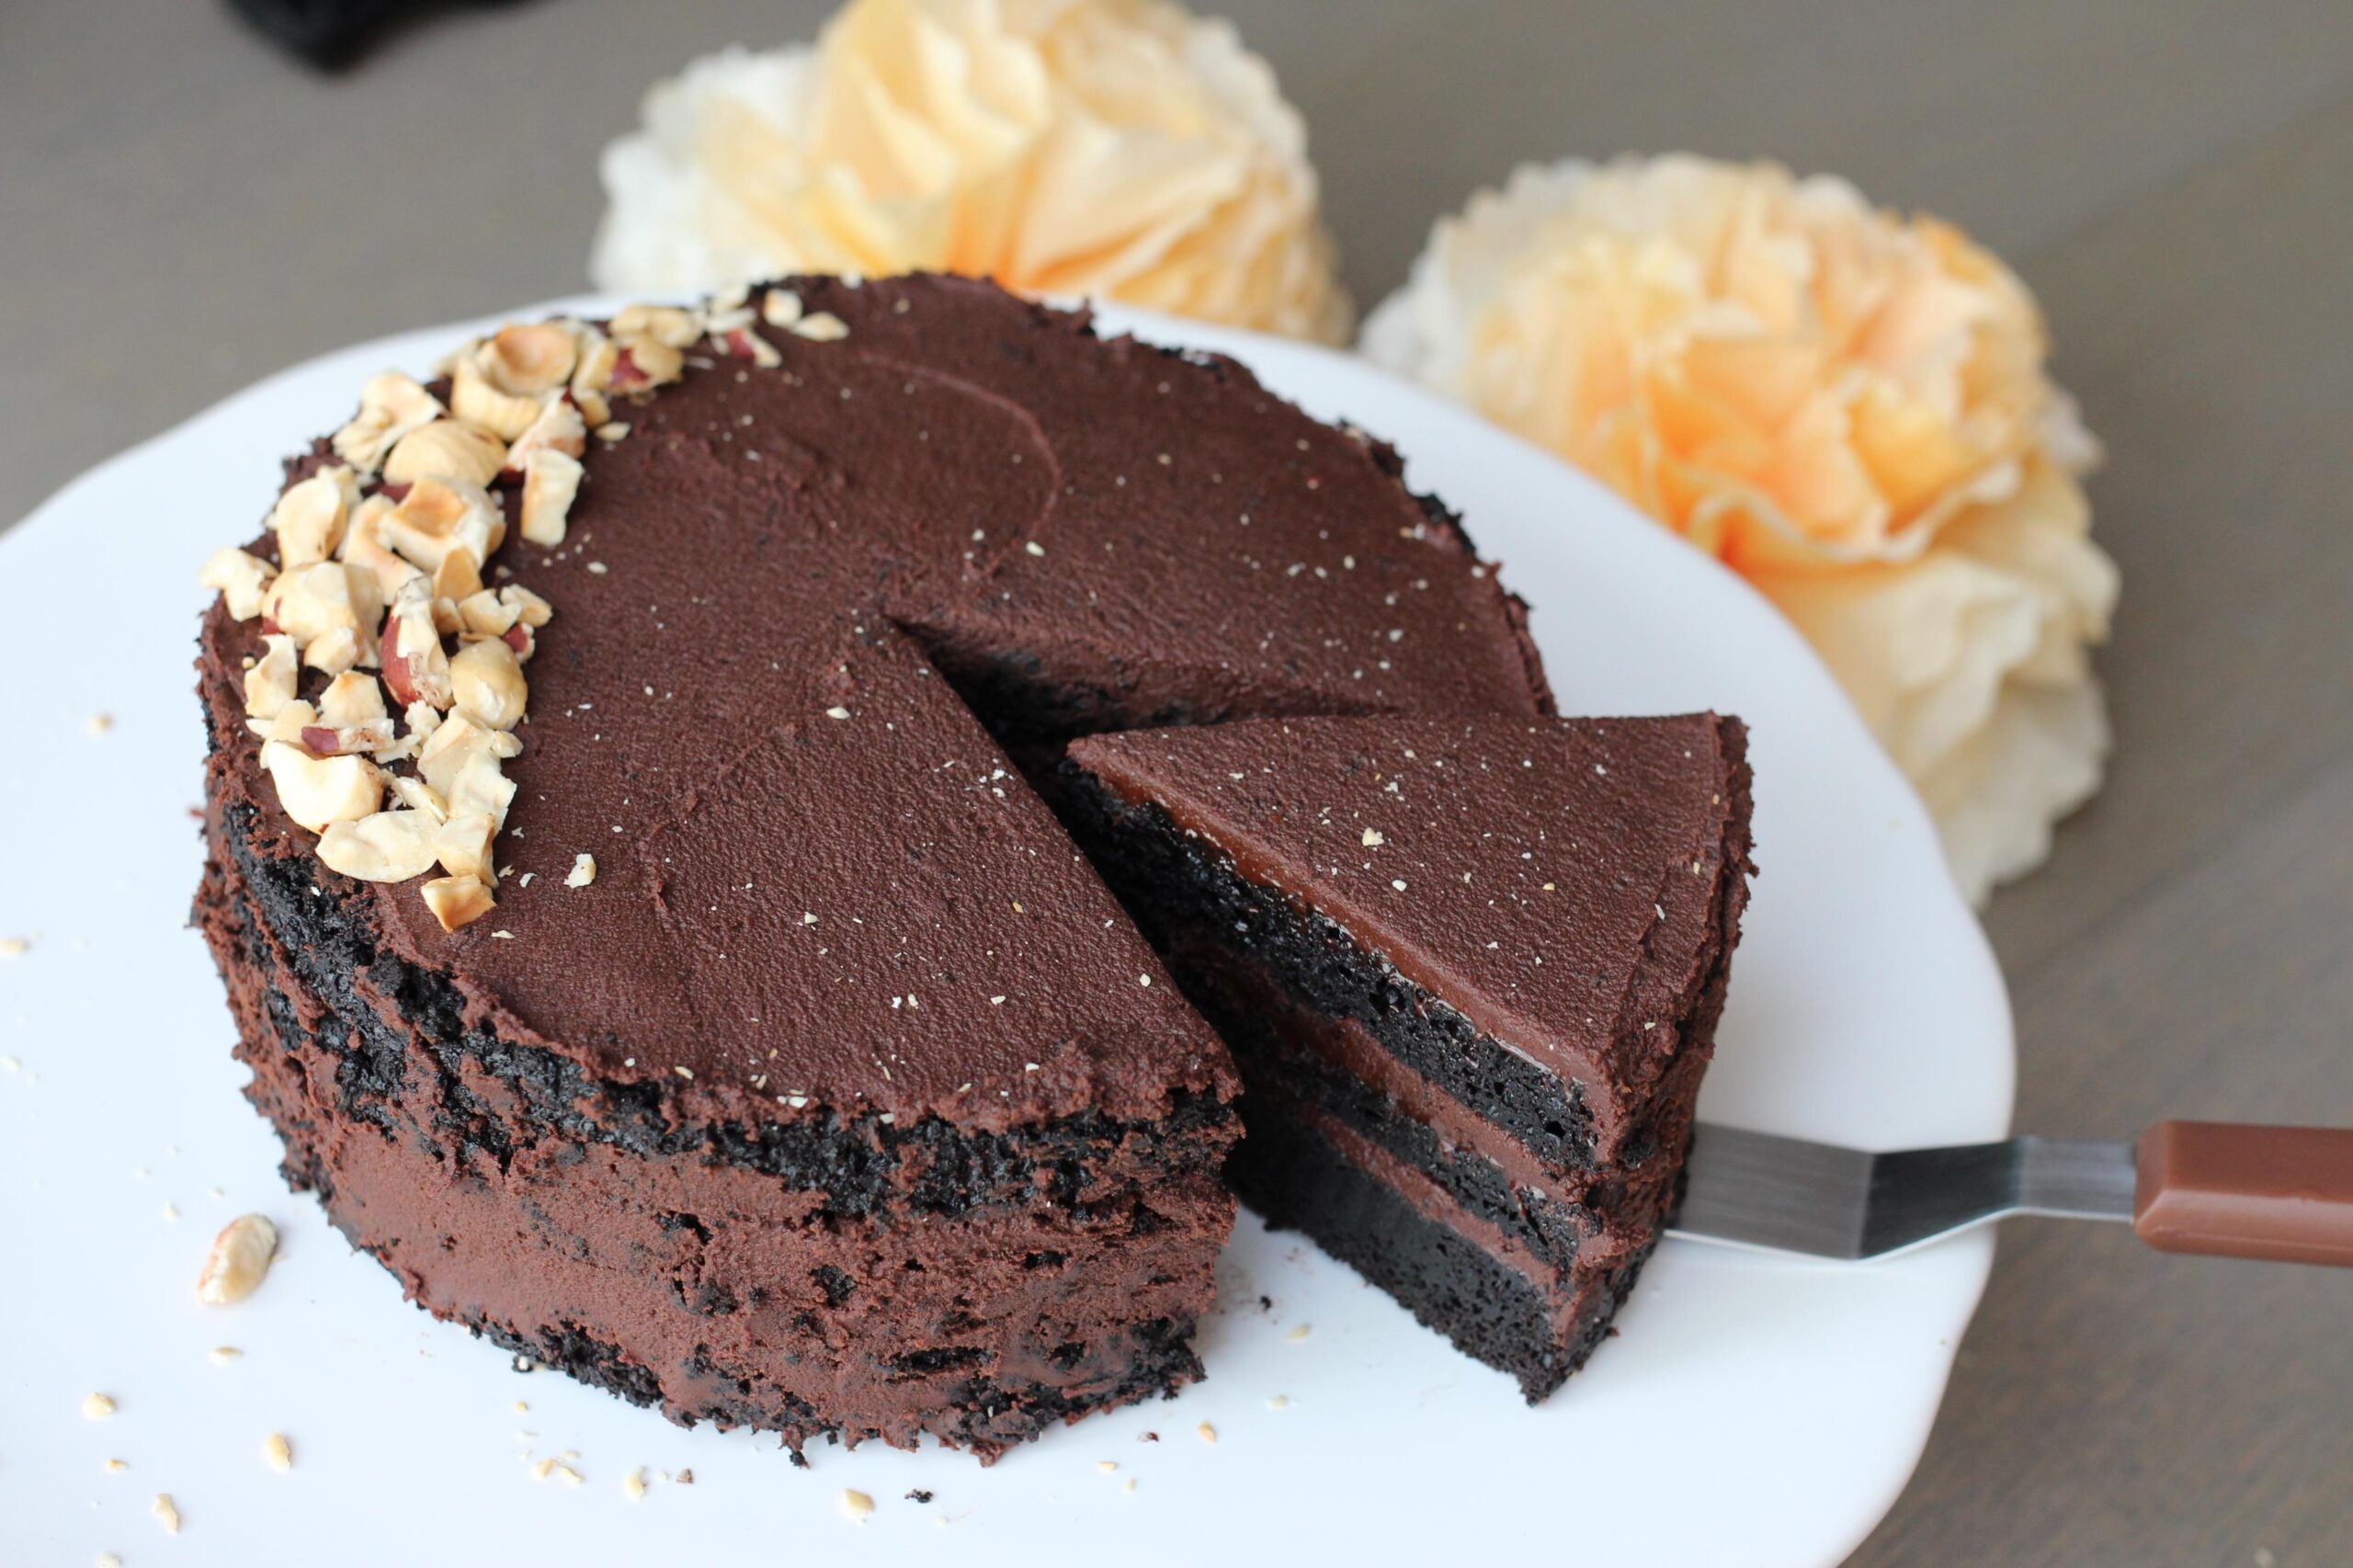  Indulge into this vegan chocolate cake with chocolate ganache frosting!